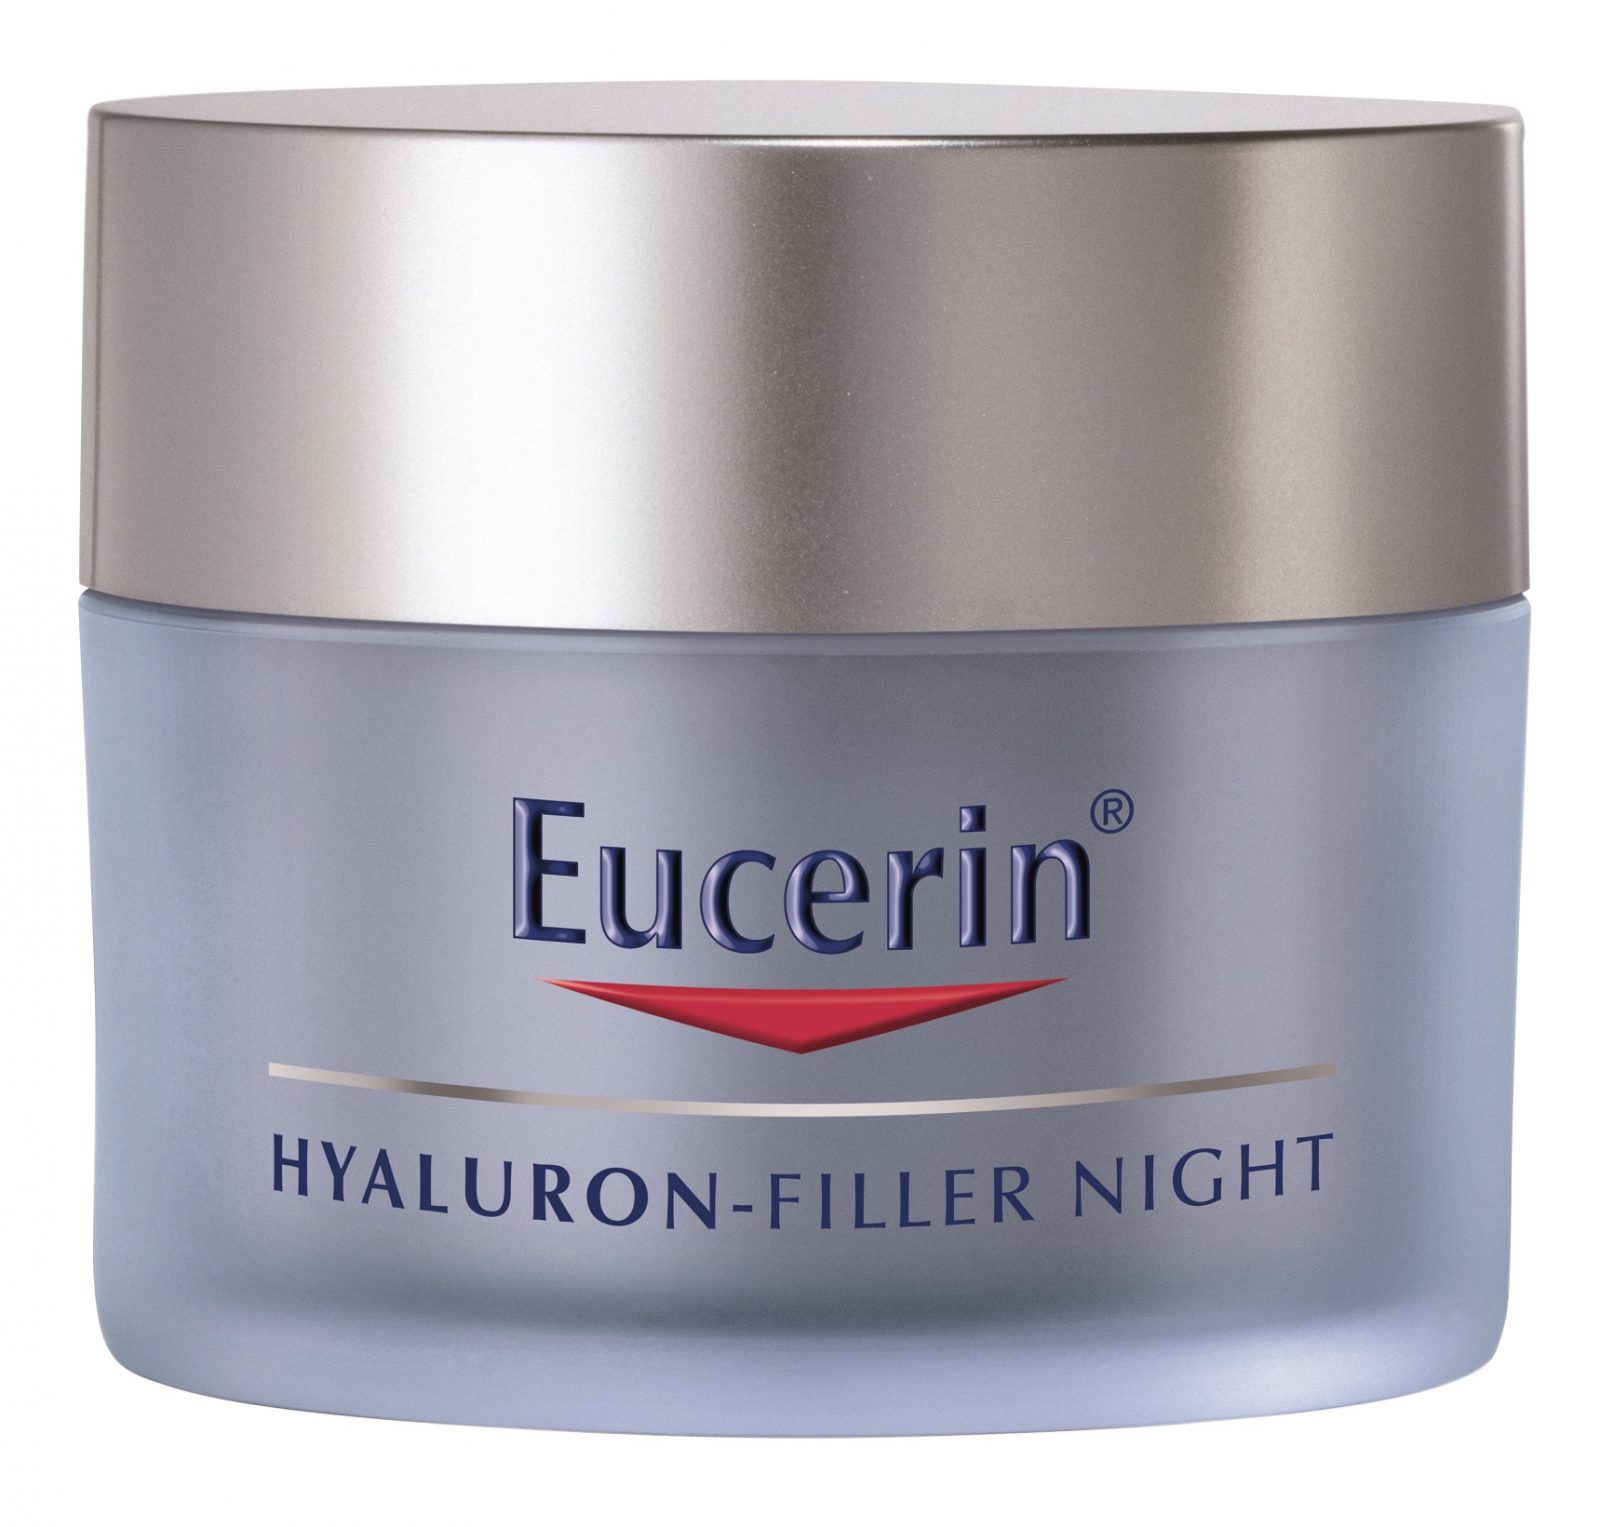 Eucerin® Hyaluron Filler linija - dokazani borac protiv površinskih i dubinskih znakova starenja!